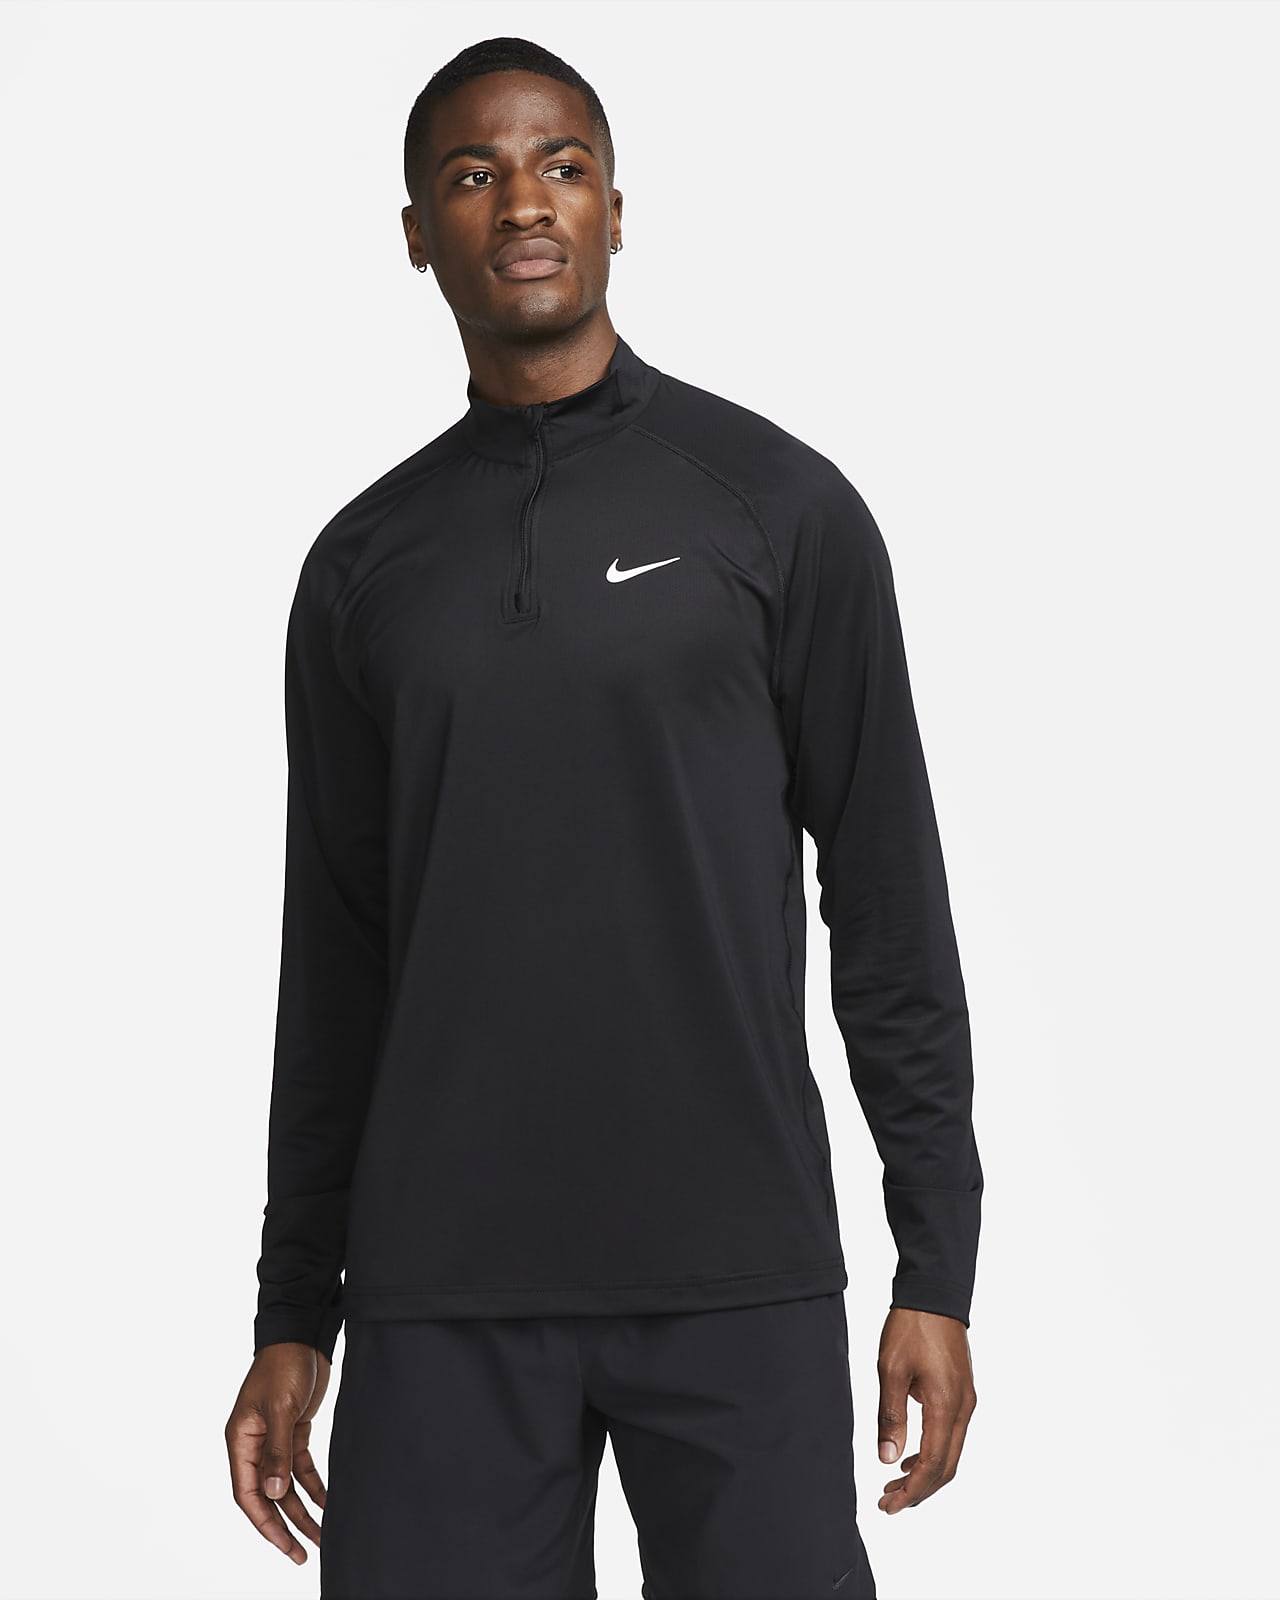 Ready Men's Dri-FIT Fitness Top. Nike.com